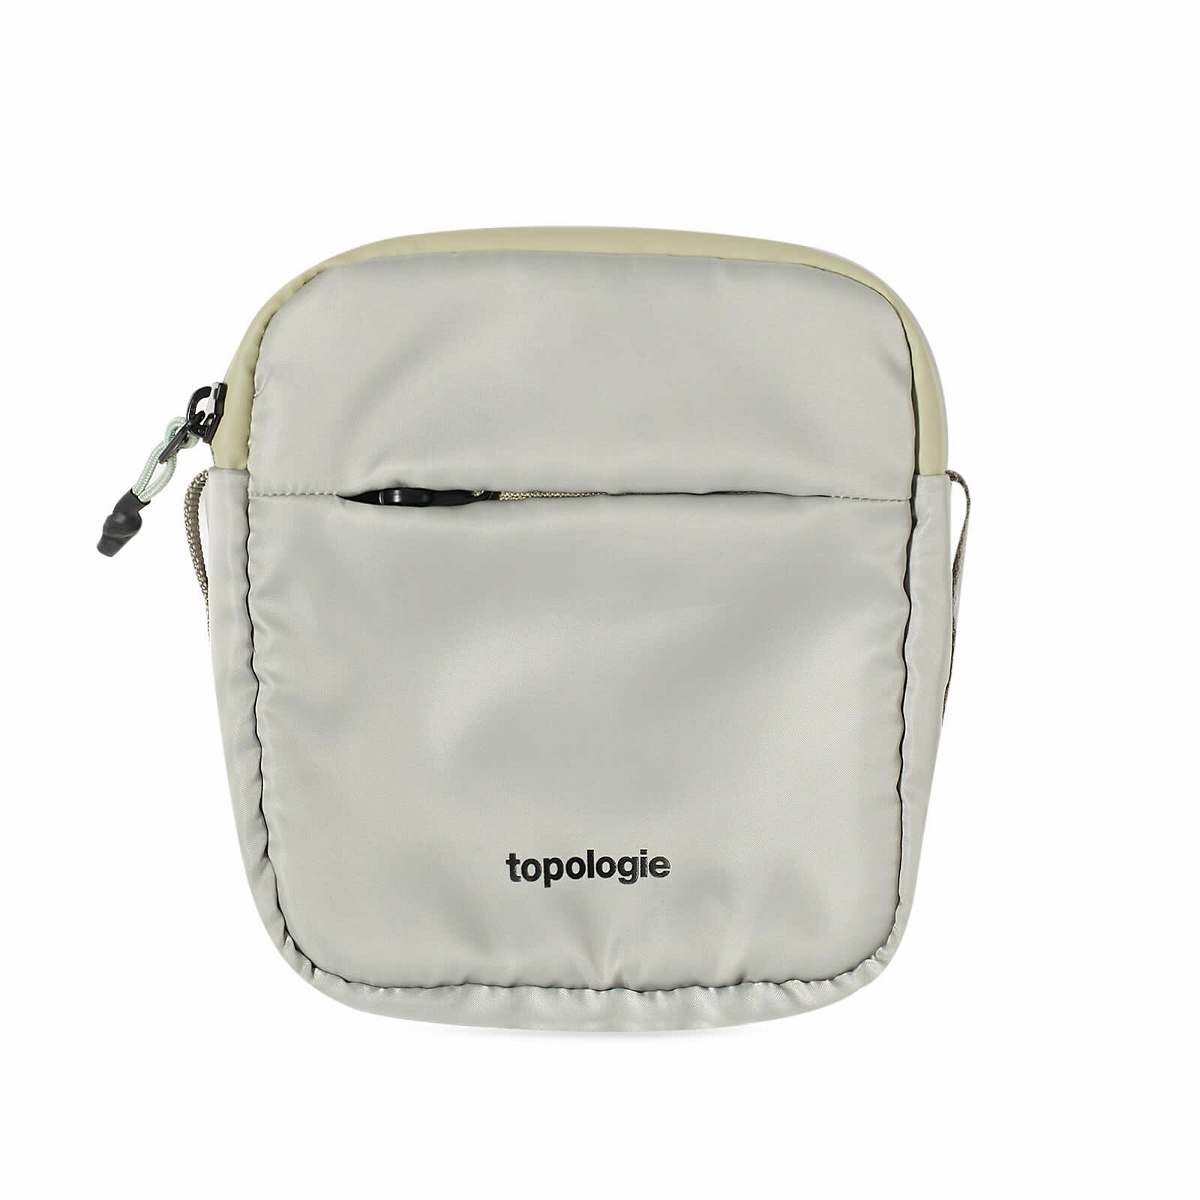 Topologie Tinbox Mini Bag in Moss Topologie